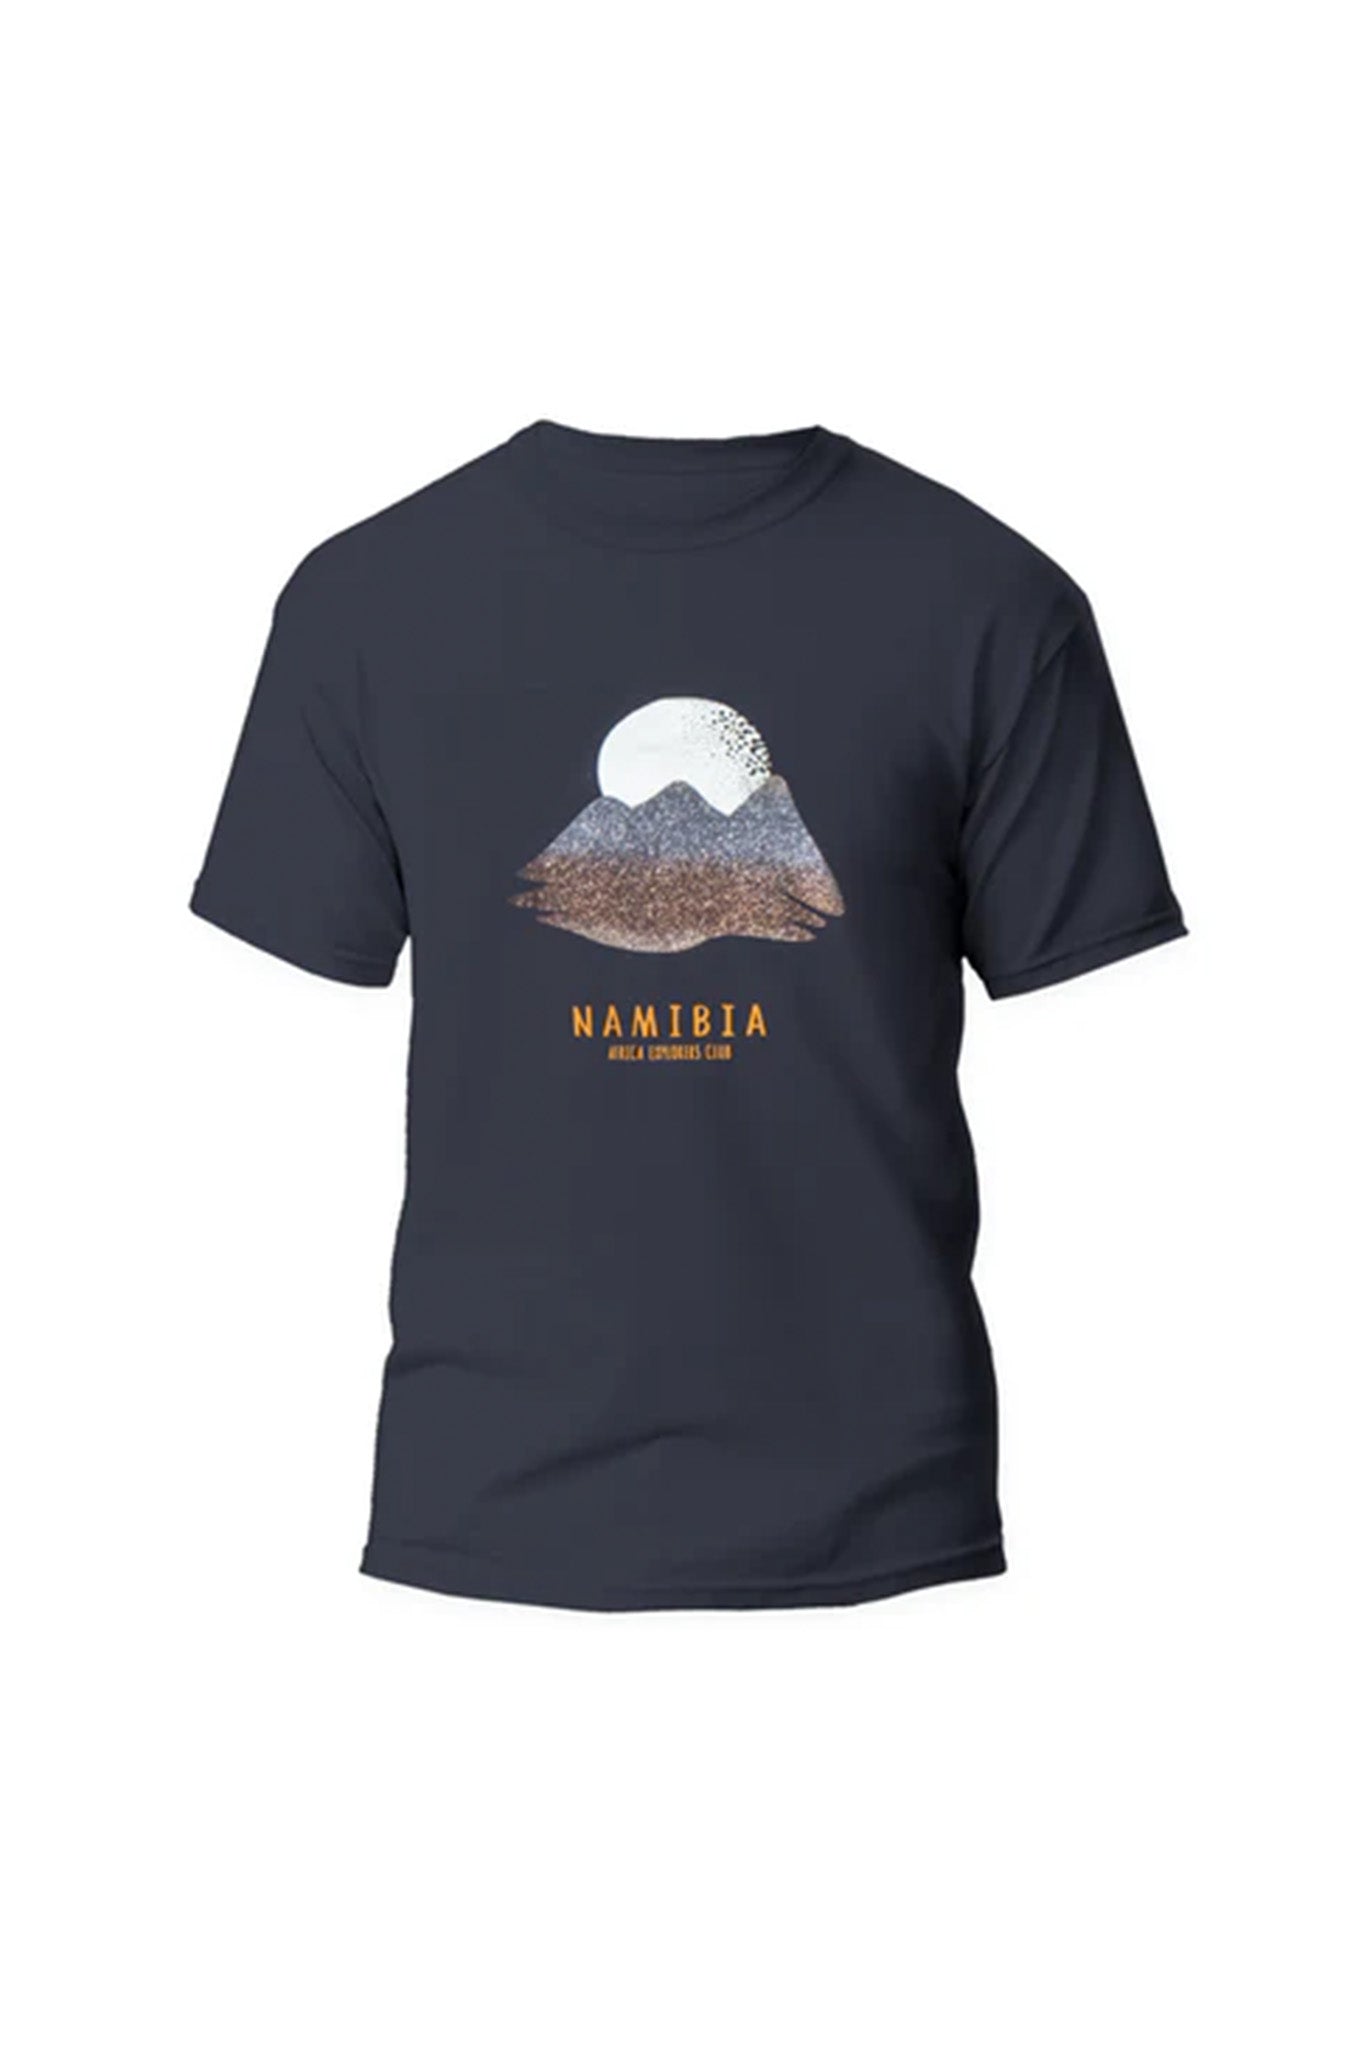 Namibia Glitter Dunes T-shirt